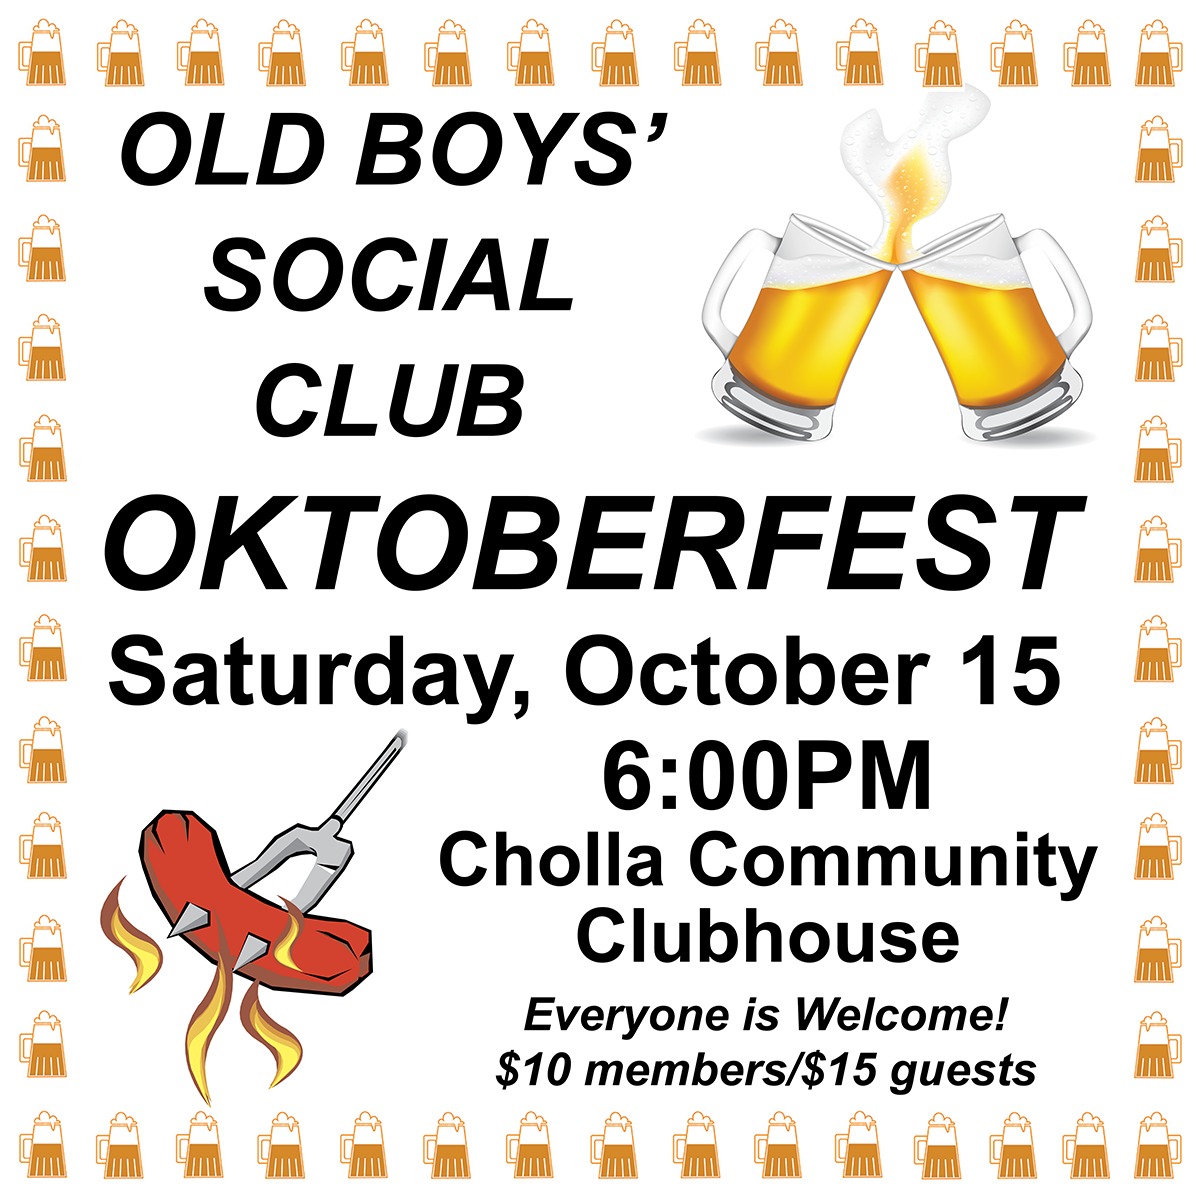 Old-Boys-Oktoberfest Old Boys' Social Club Oktoberfest